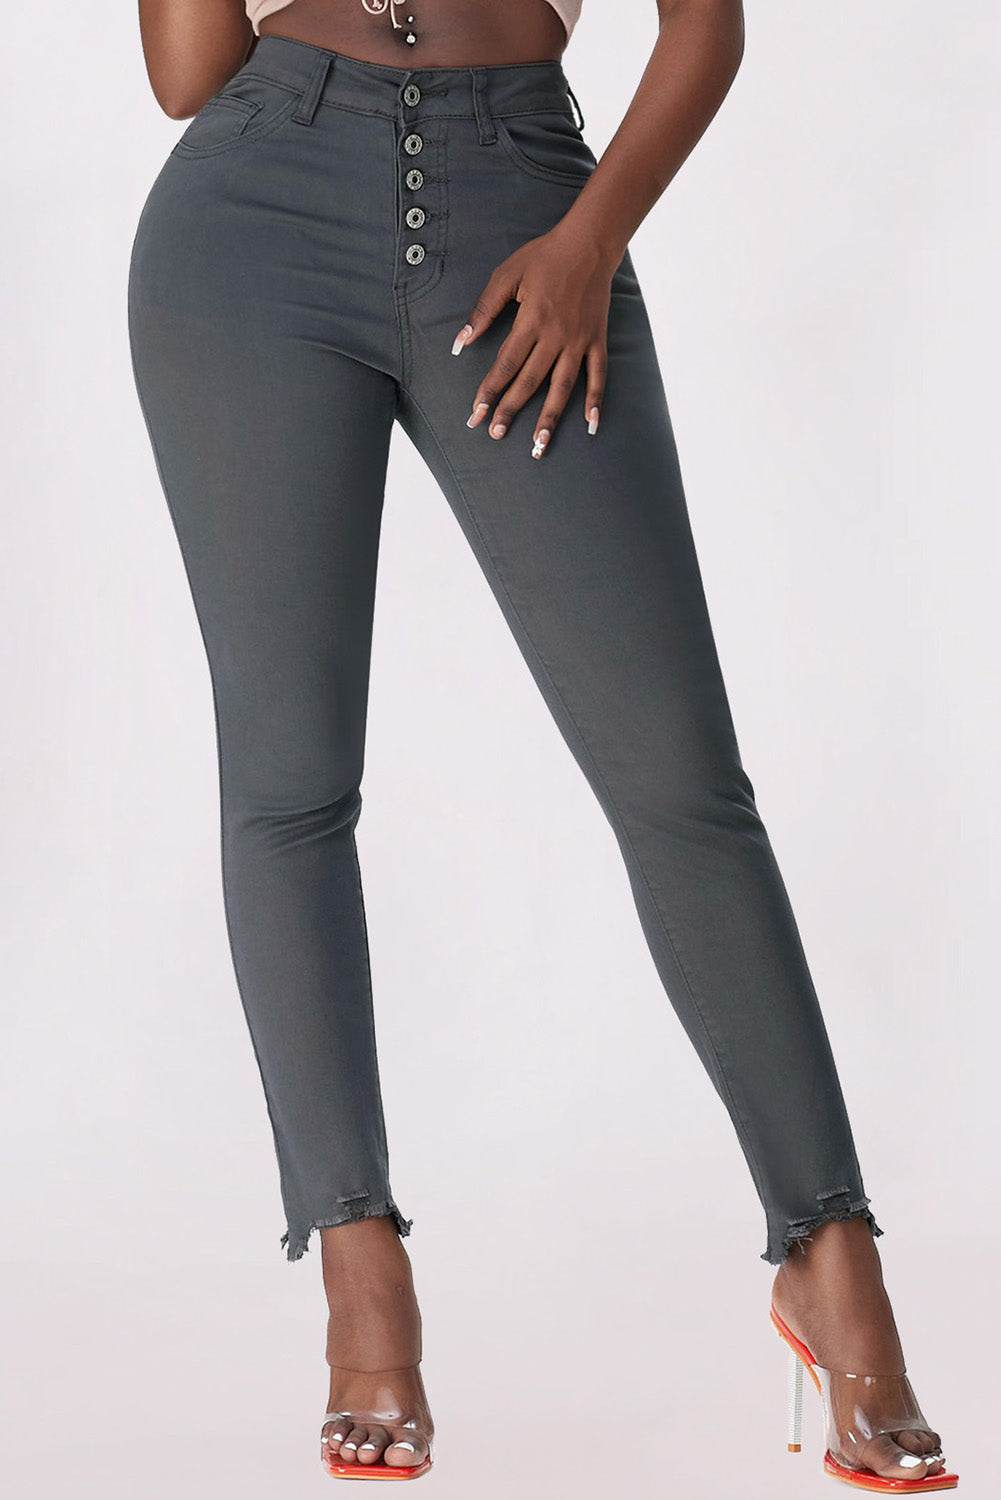 Gray Plain High Waist Buttons Frayed Cropped Denim Jeans Gray 98%Cotton+2%Elastane Jeans JT's Designer Fashion